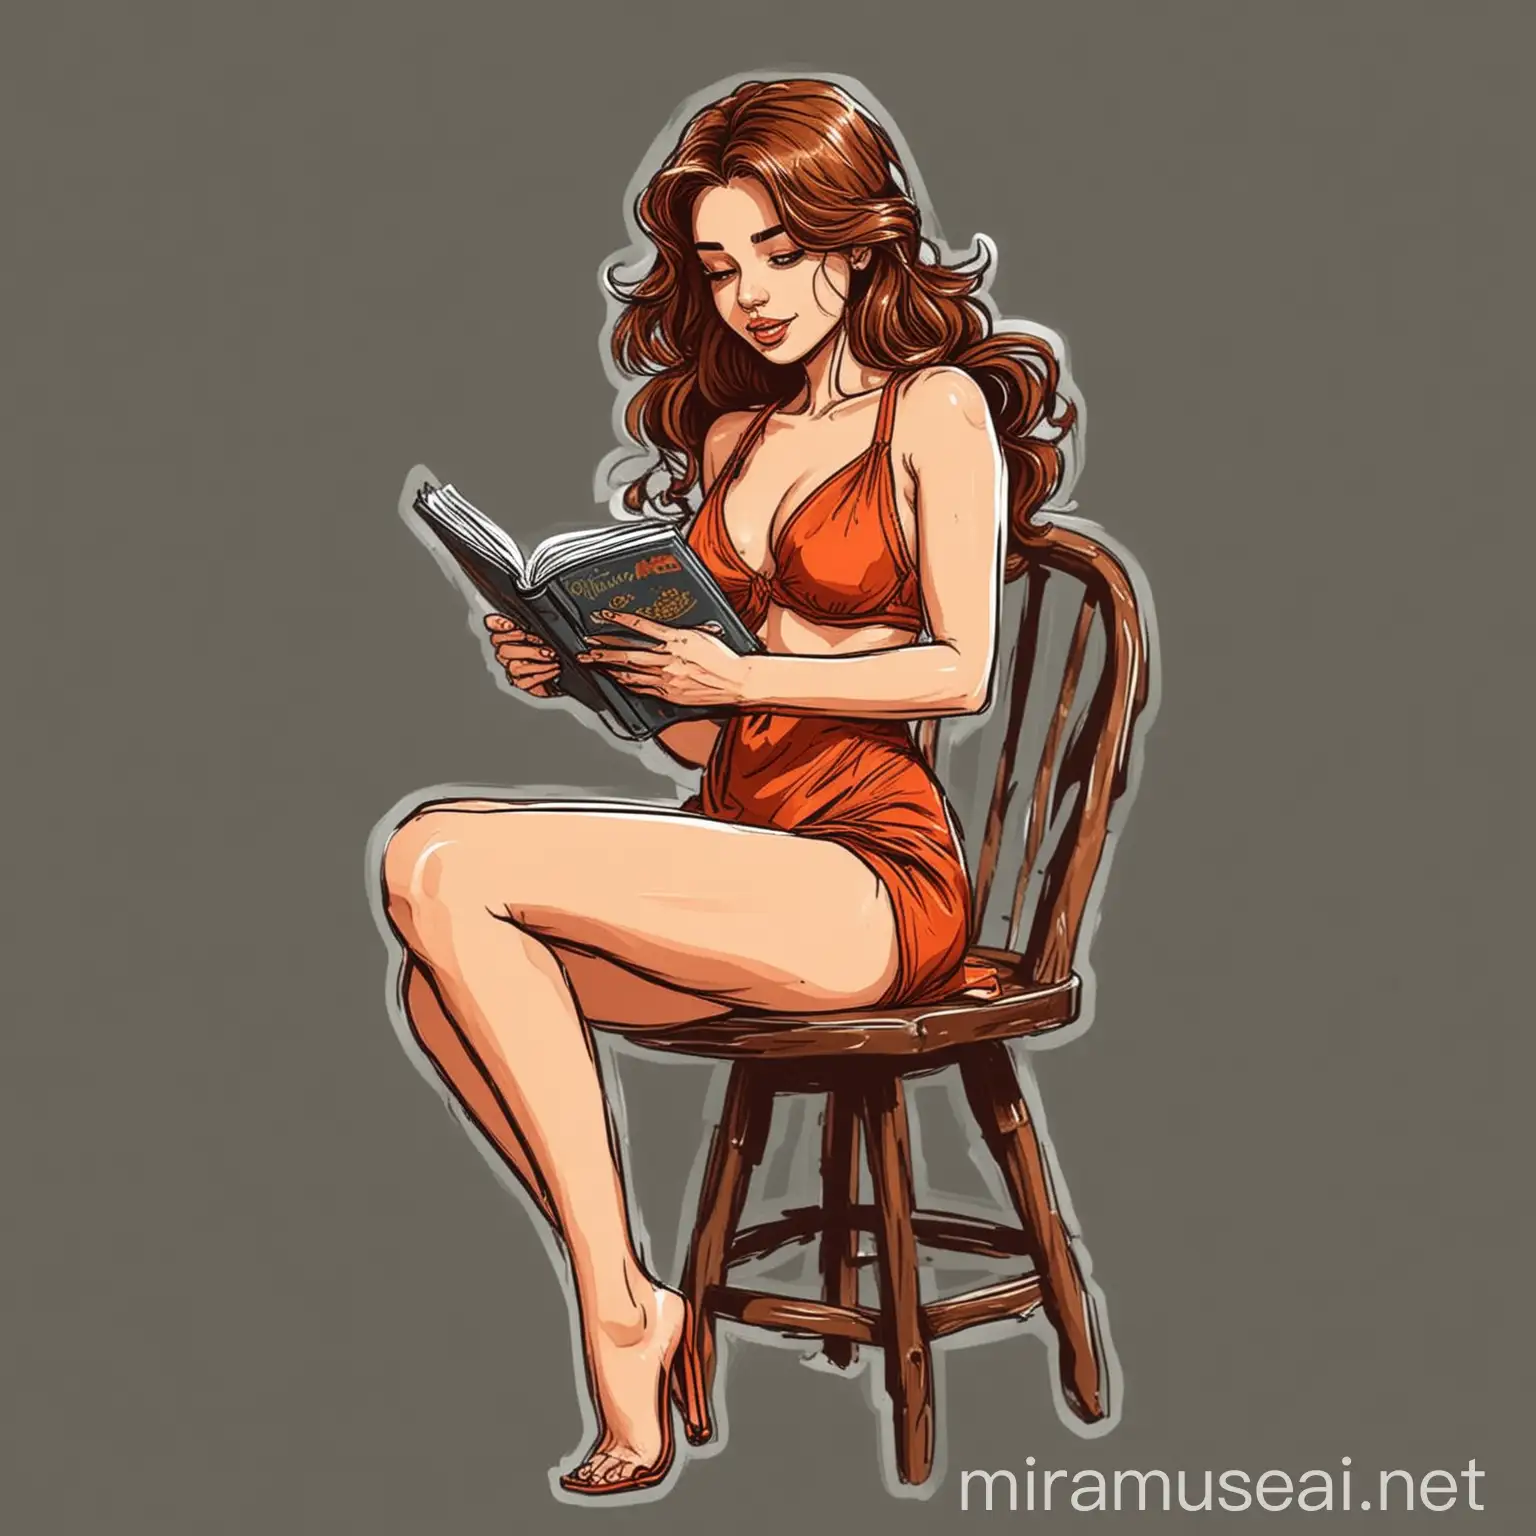 Attractive Woman in Bikini Reading Book on Stool Vector Illustration Sticker